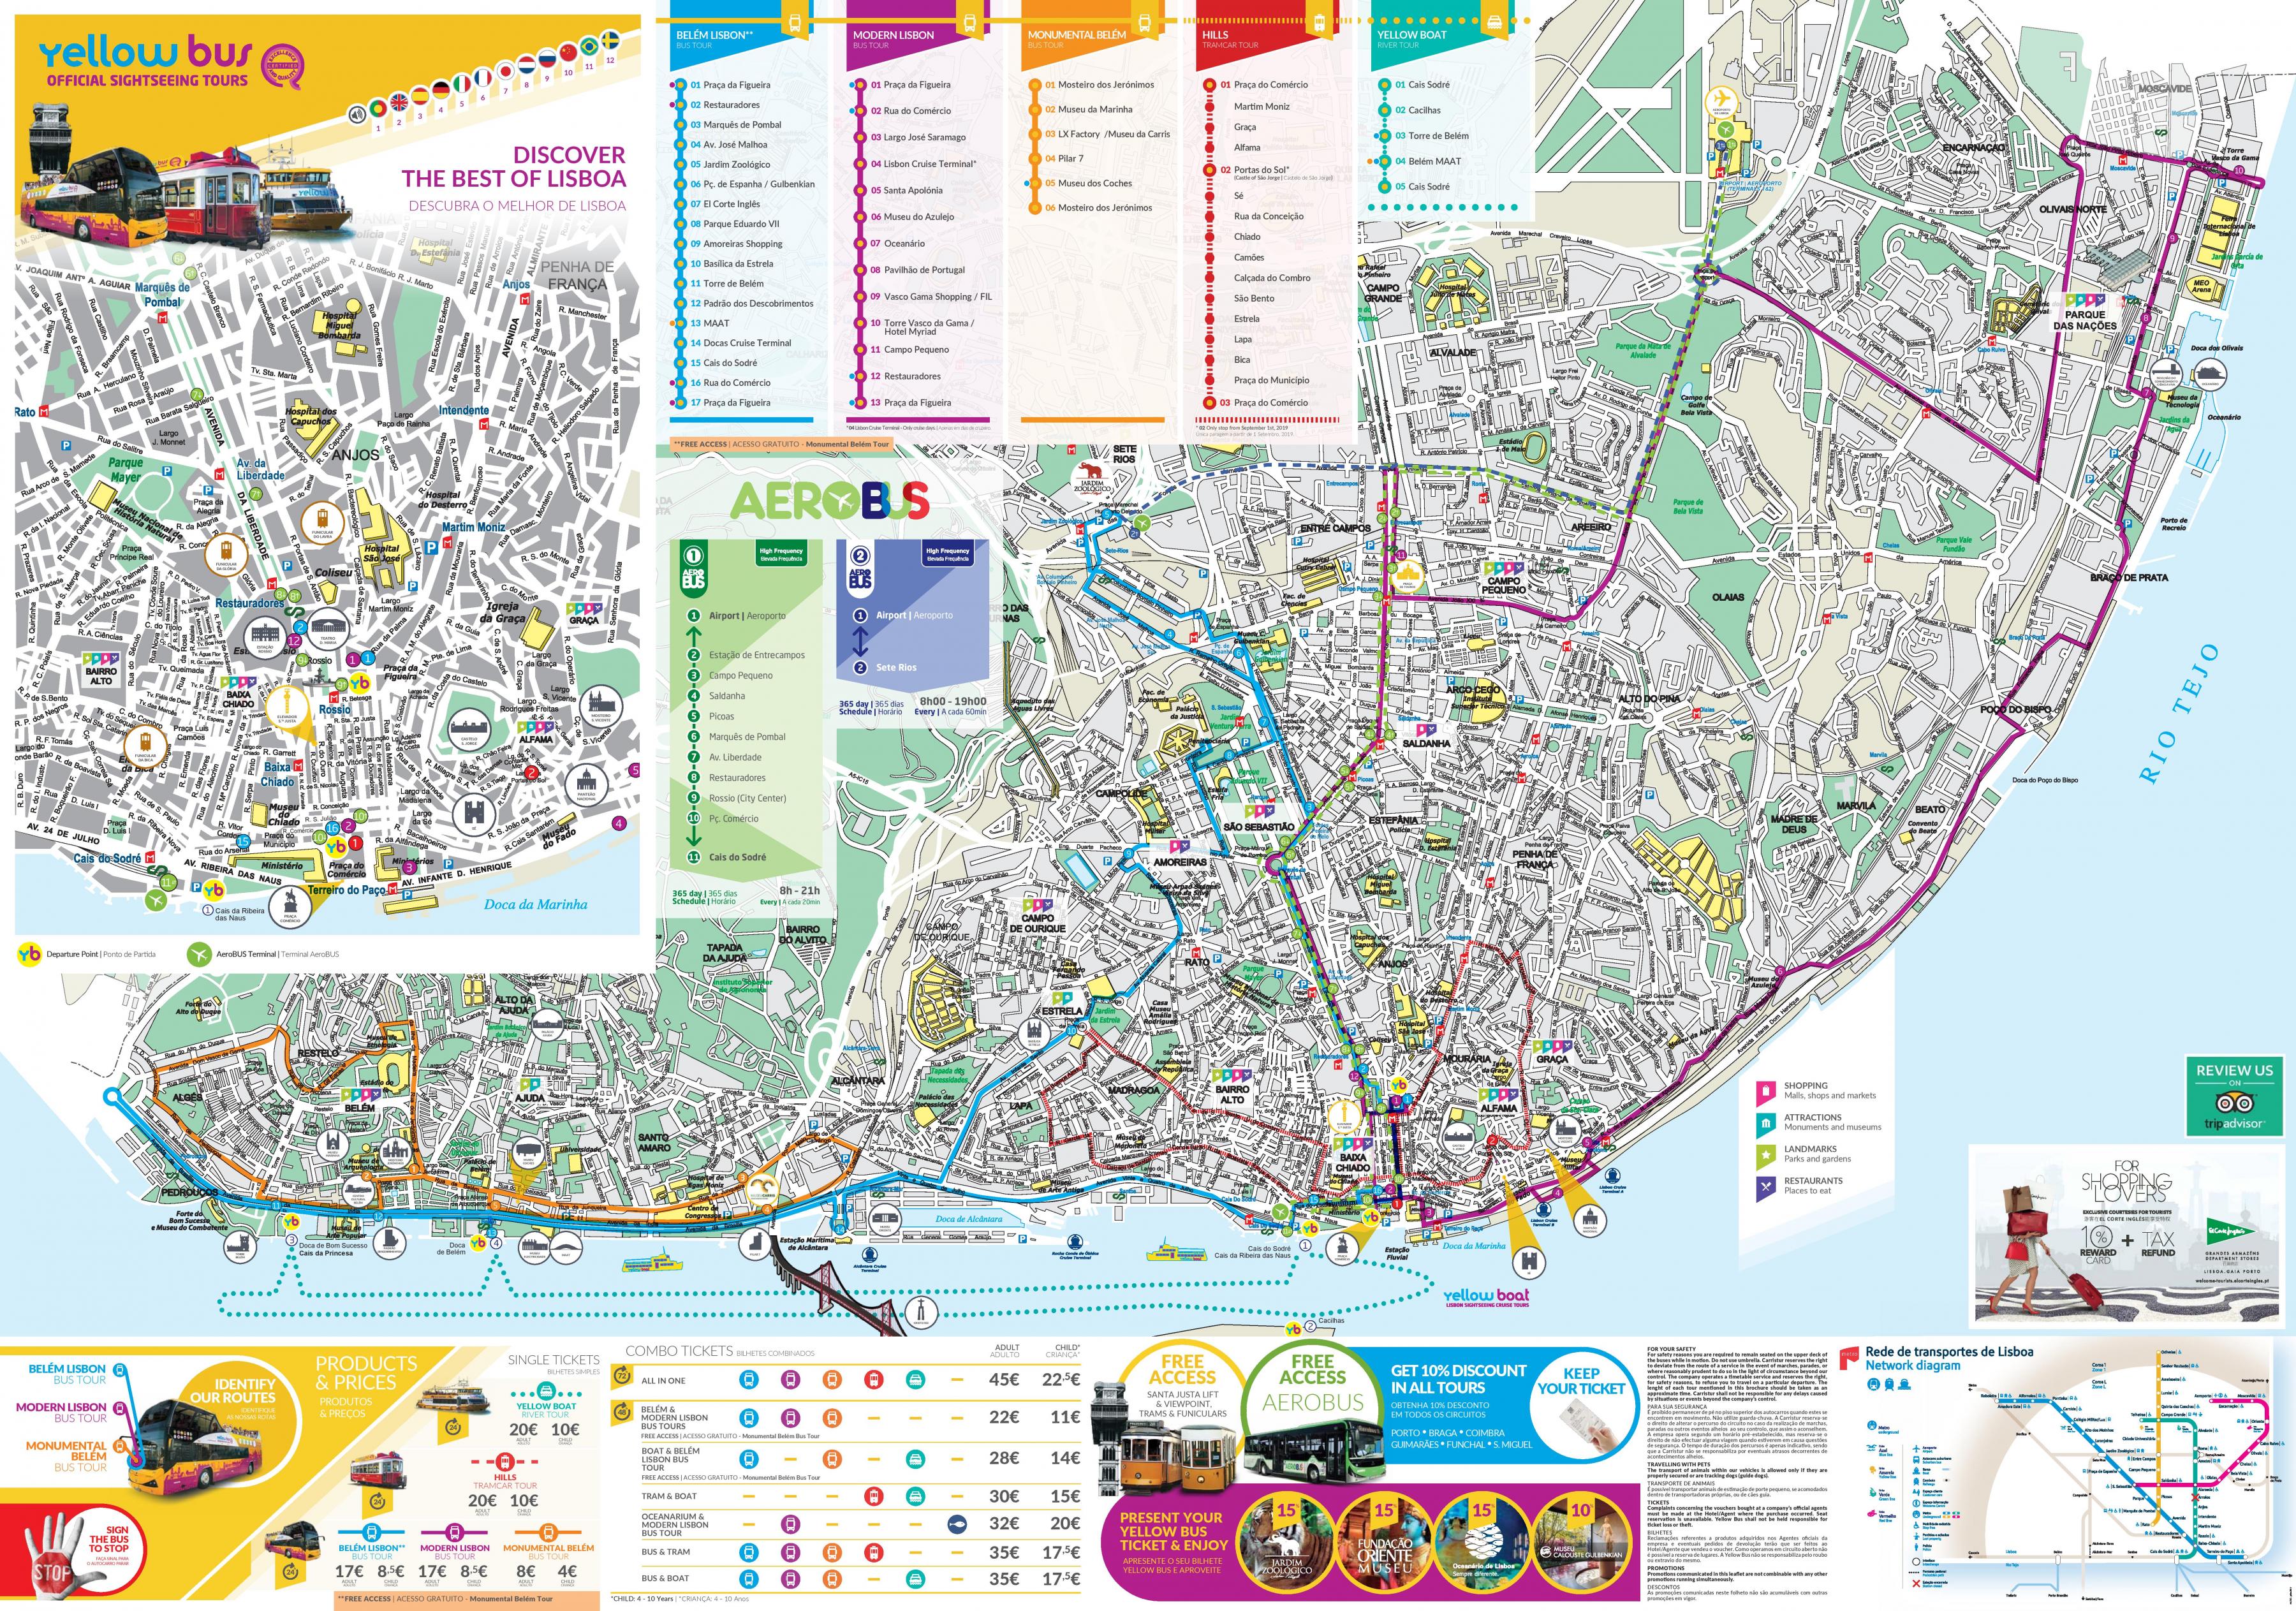 Lisbon Yellow Bus Tour Map 